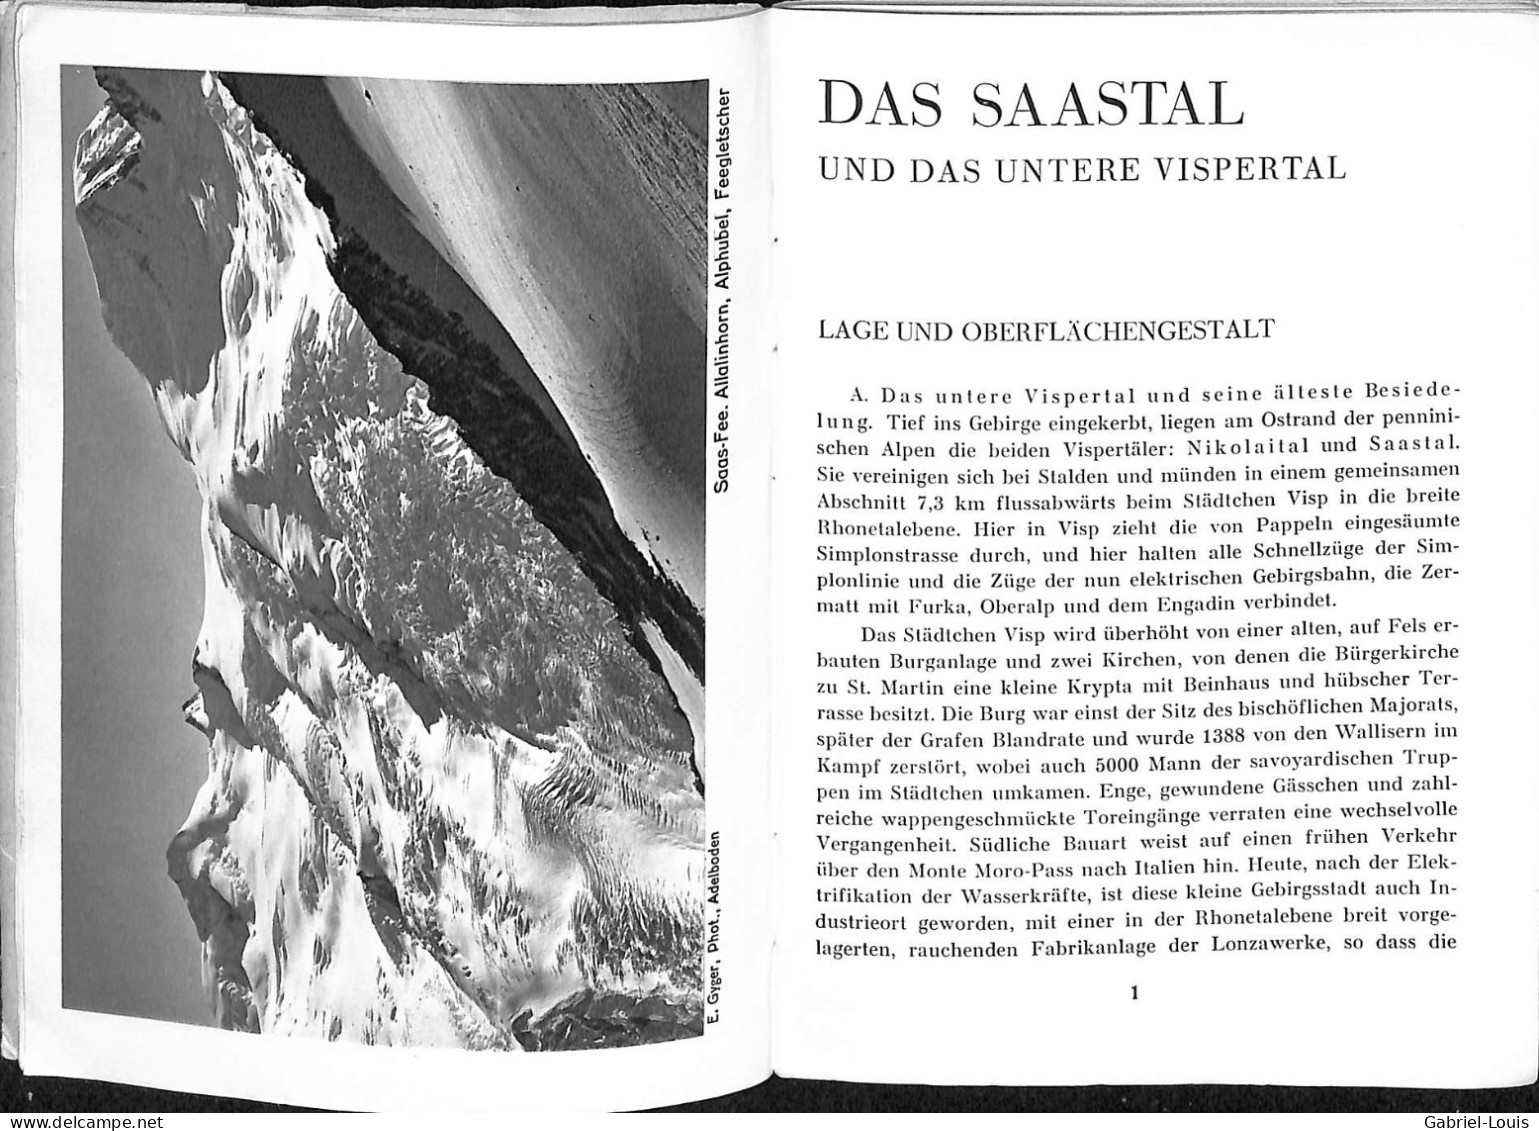 Poststrasse Saastal Saas-Fee Saas-Groud Géologie Alpenflora - Tourism Brochures